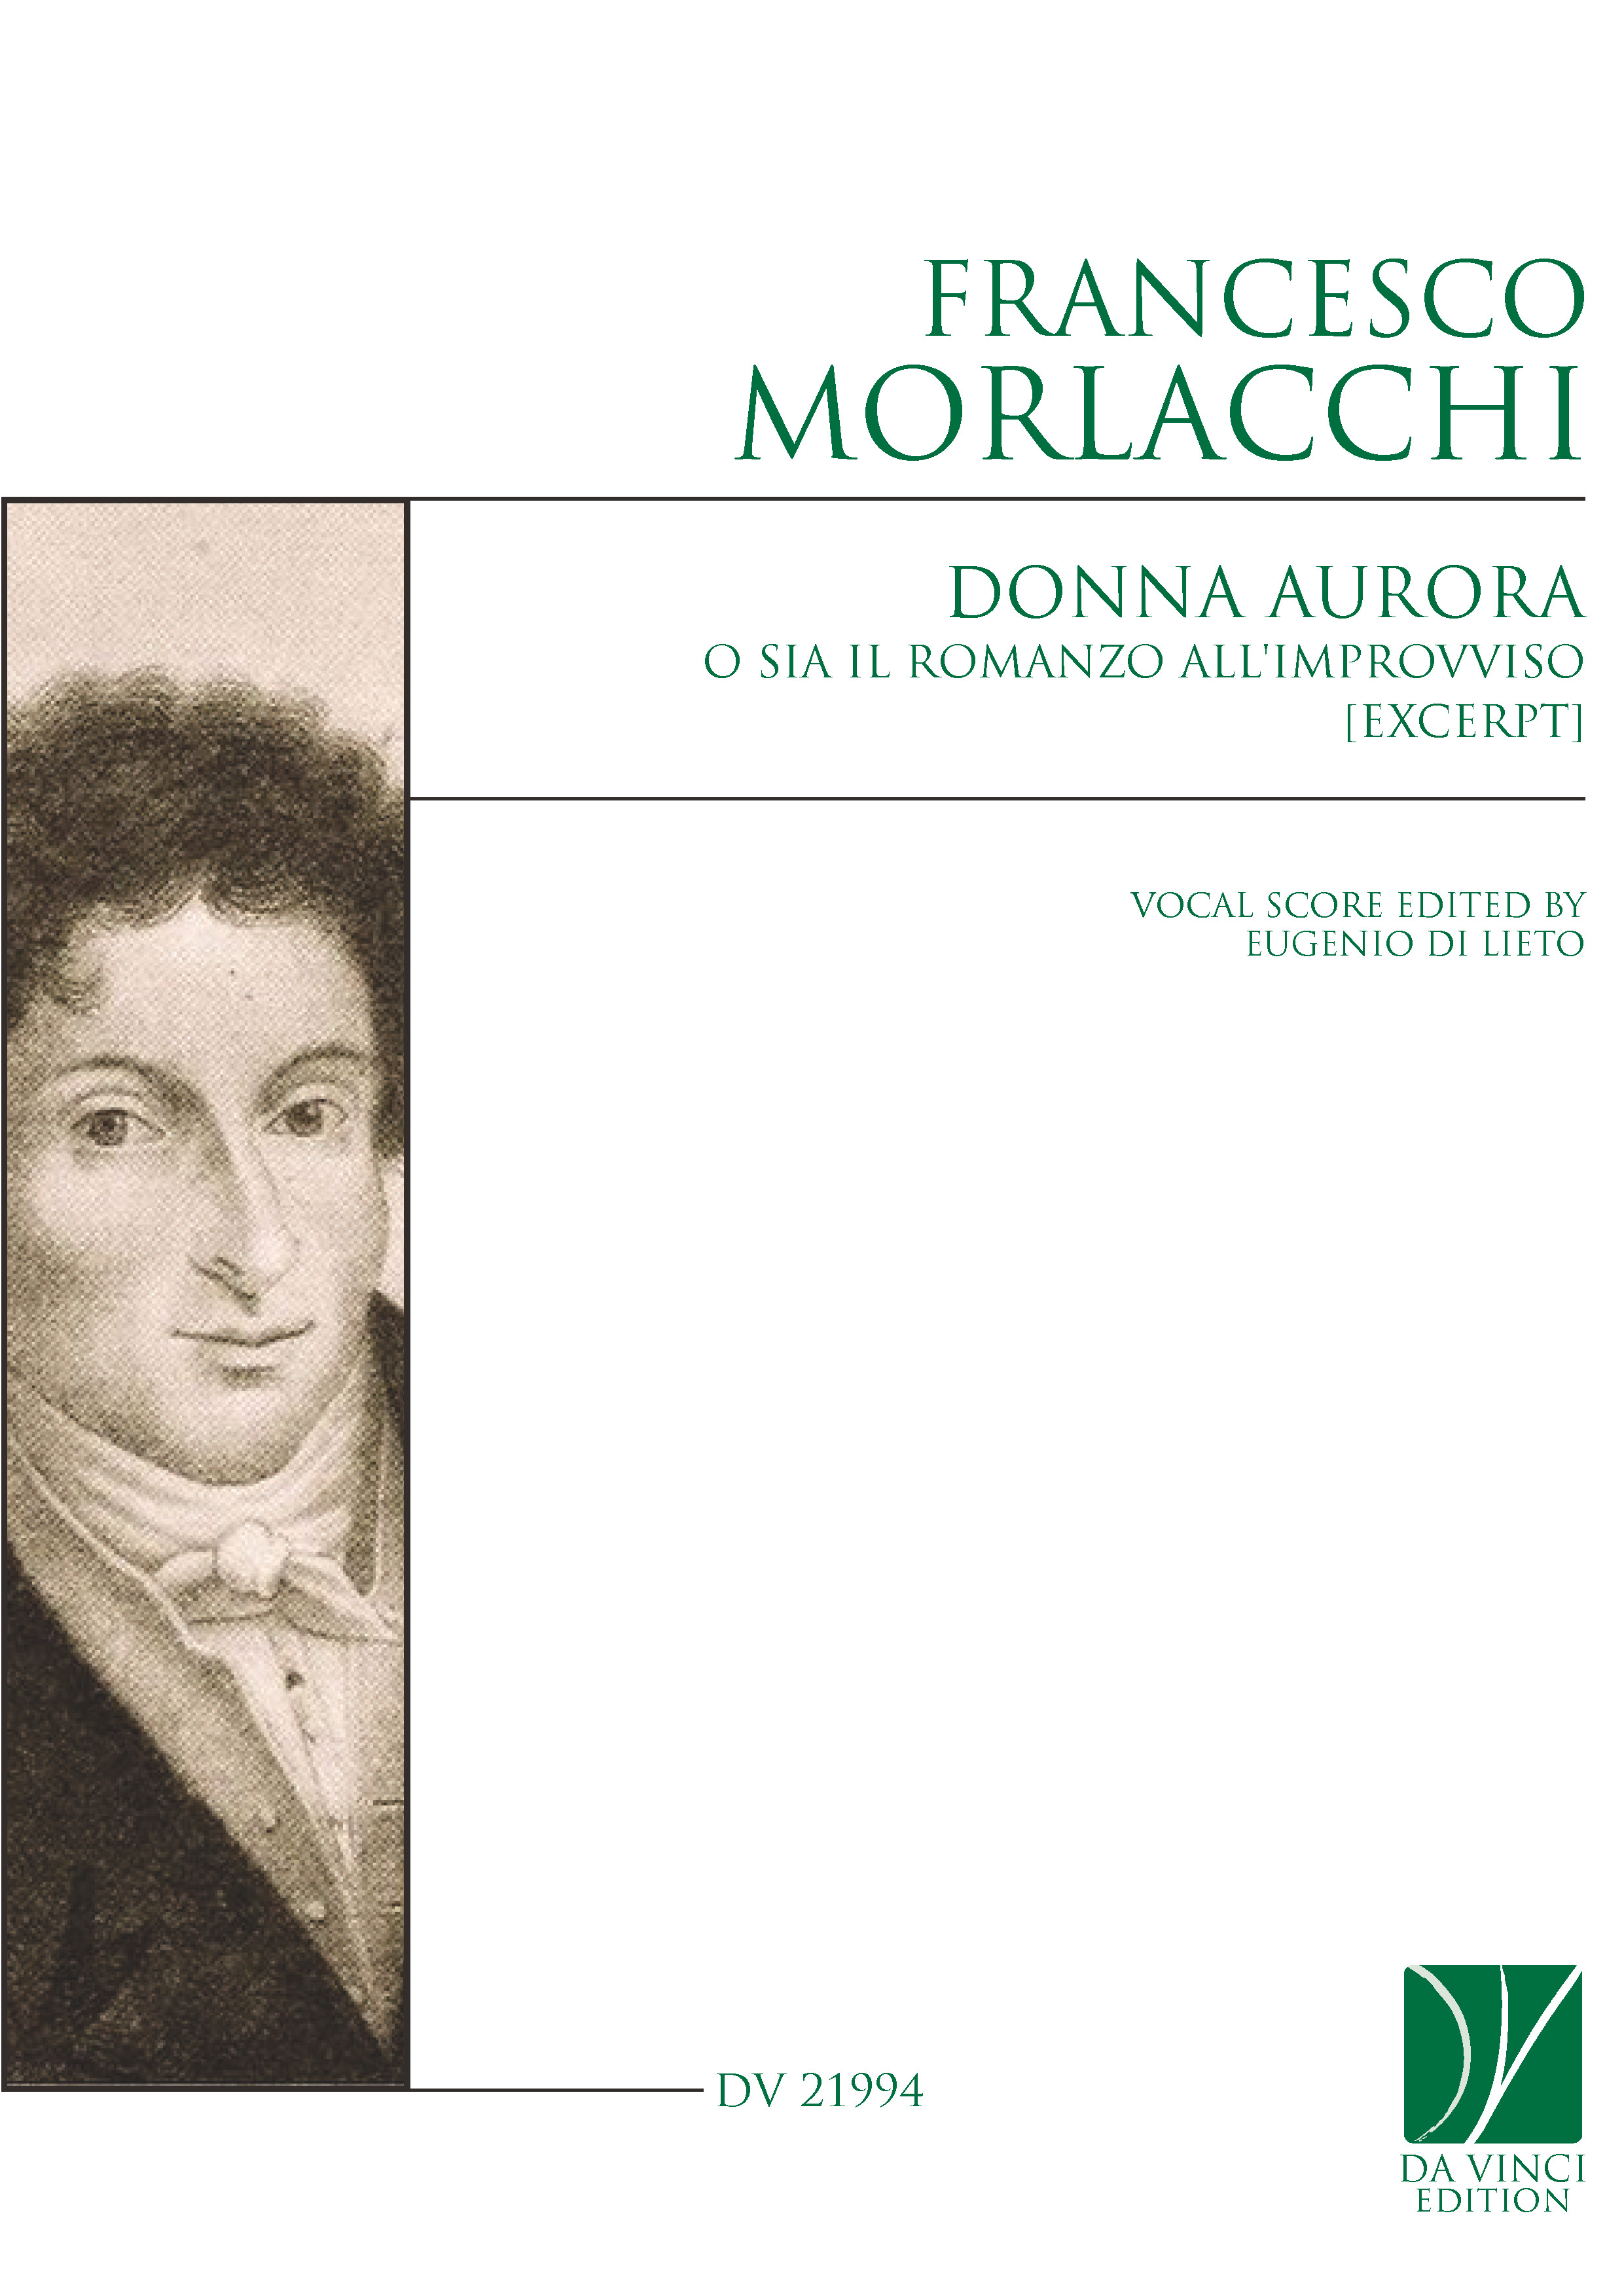 DV 21994 - Cover (Morlacchi - Donna)